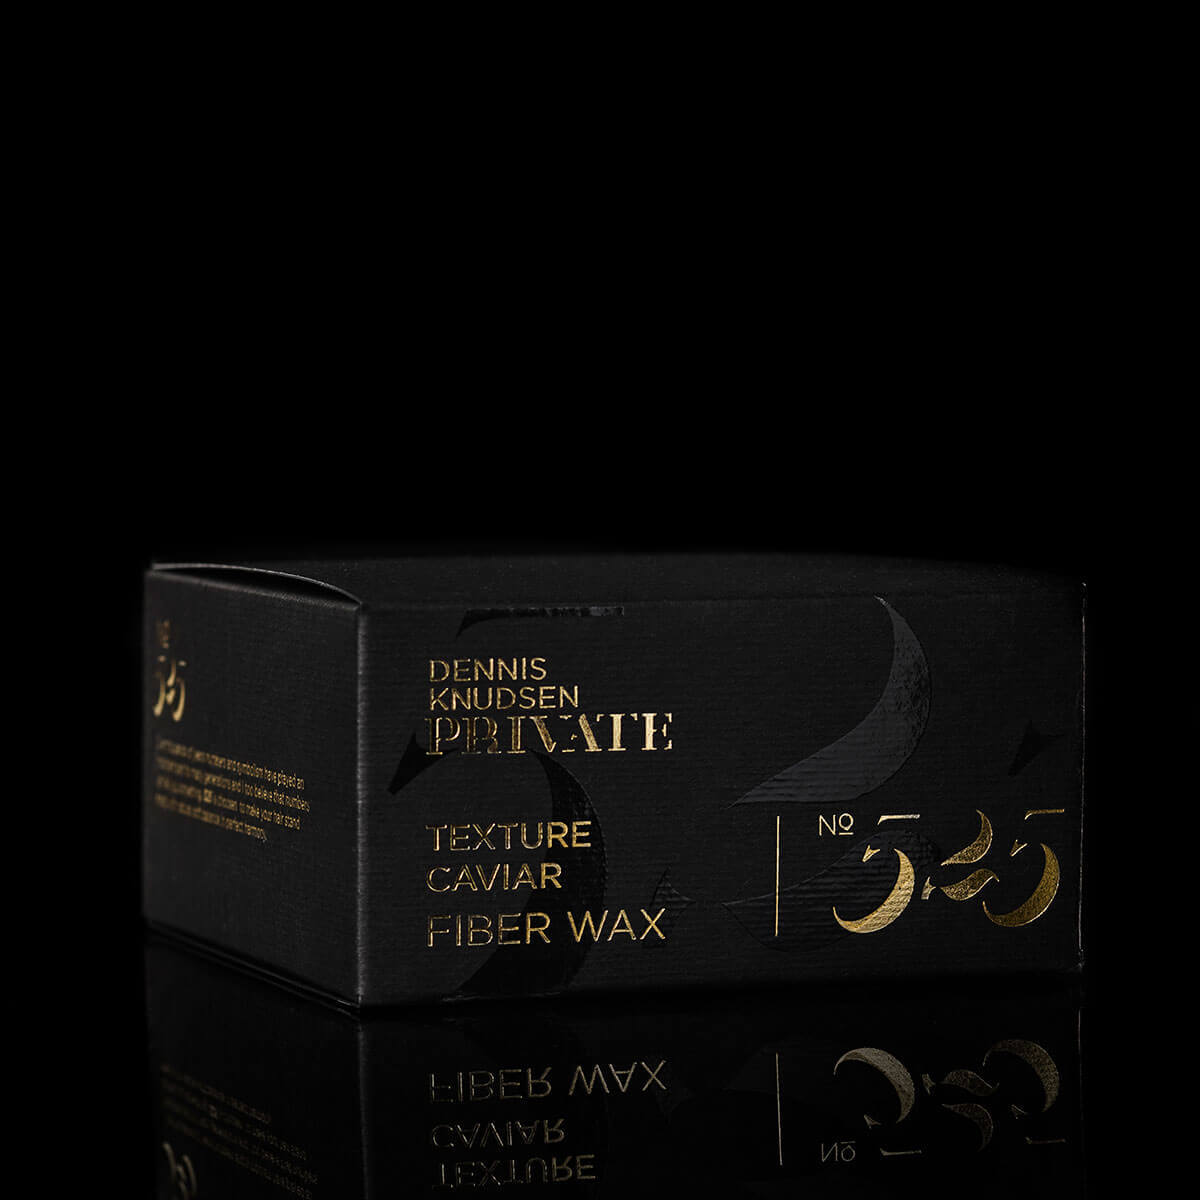 texture caviar fiber wax 525 dennis knudsen private box side